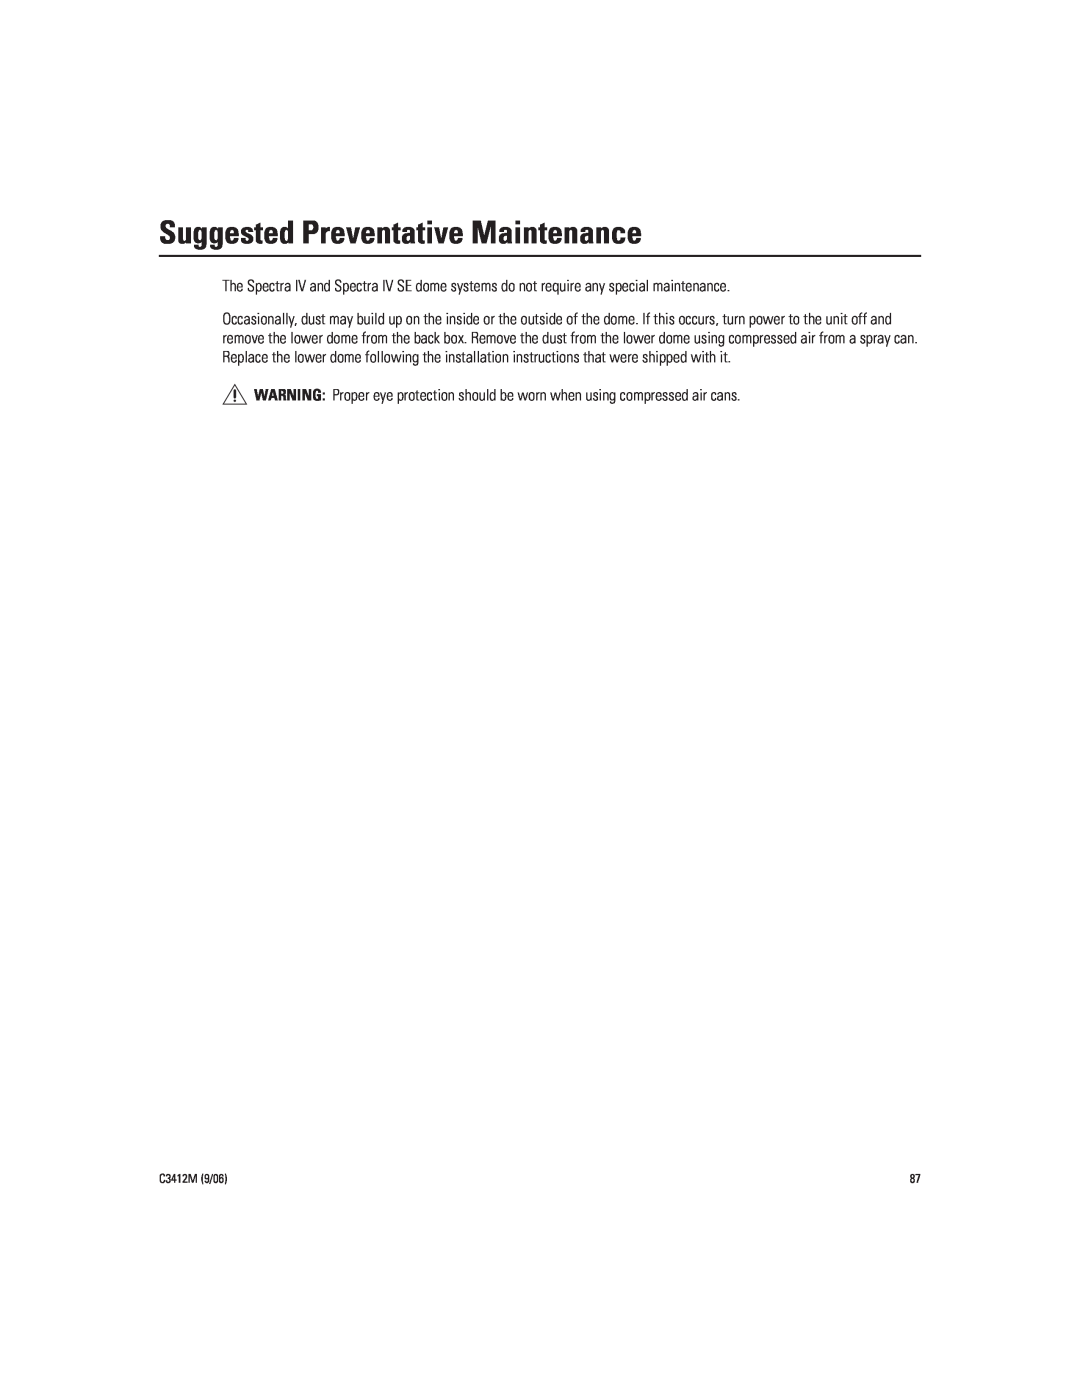 Pelco IV SE manual Suggested Preventative Maintenance, C3412M 9/06 